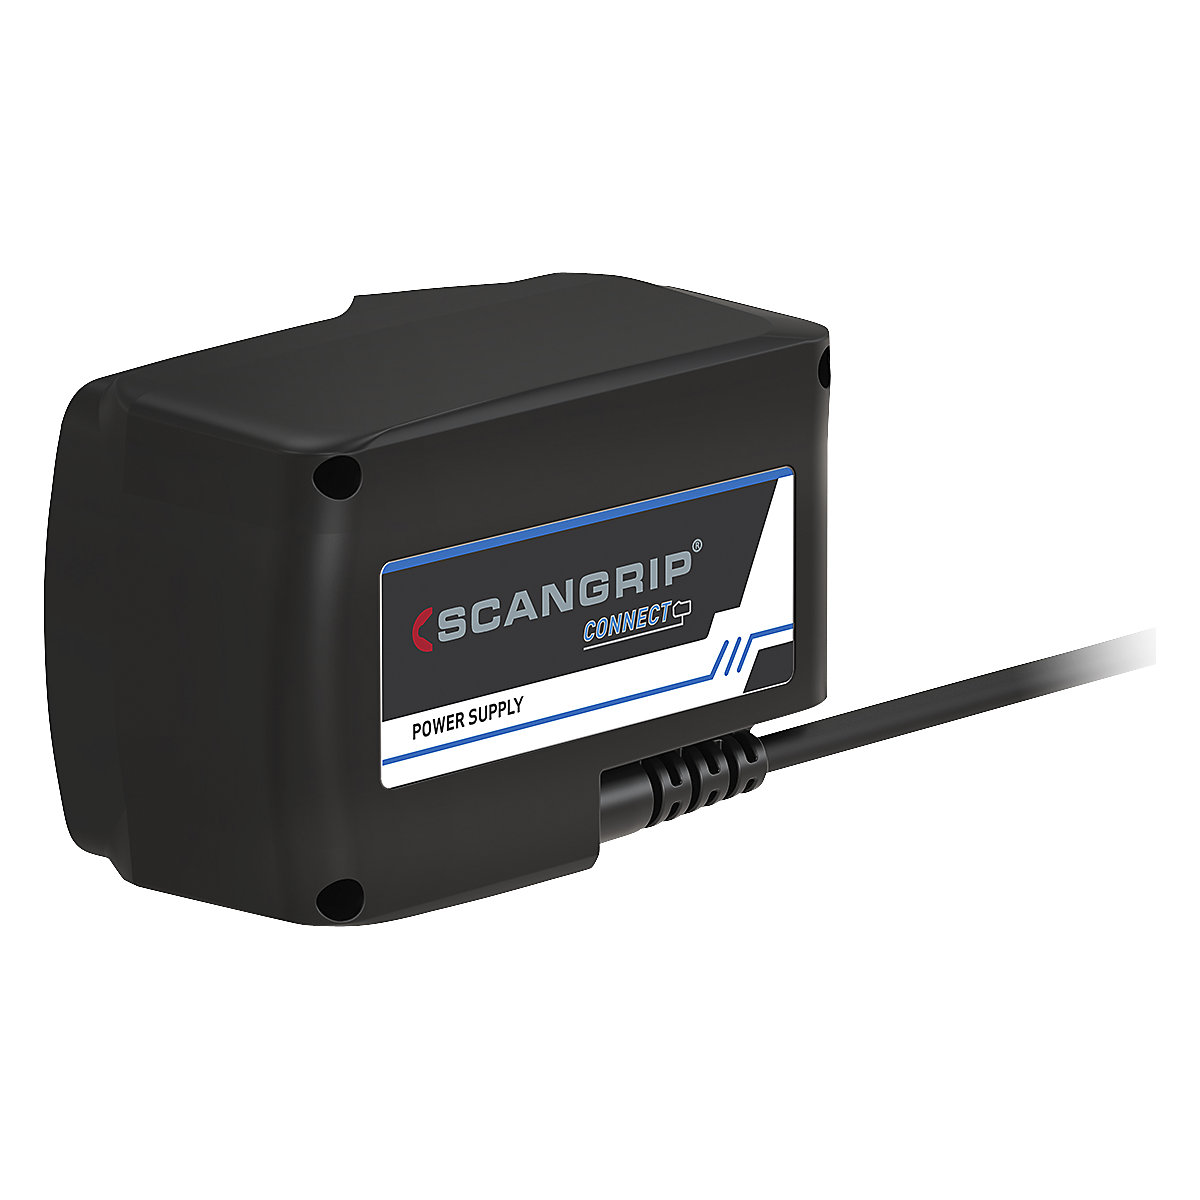 POWER SUPPLY CAS power supply unit – SCANGRIP